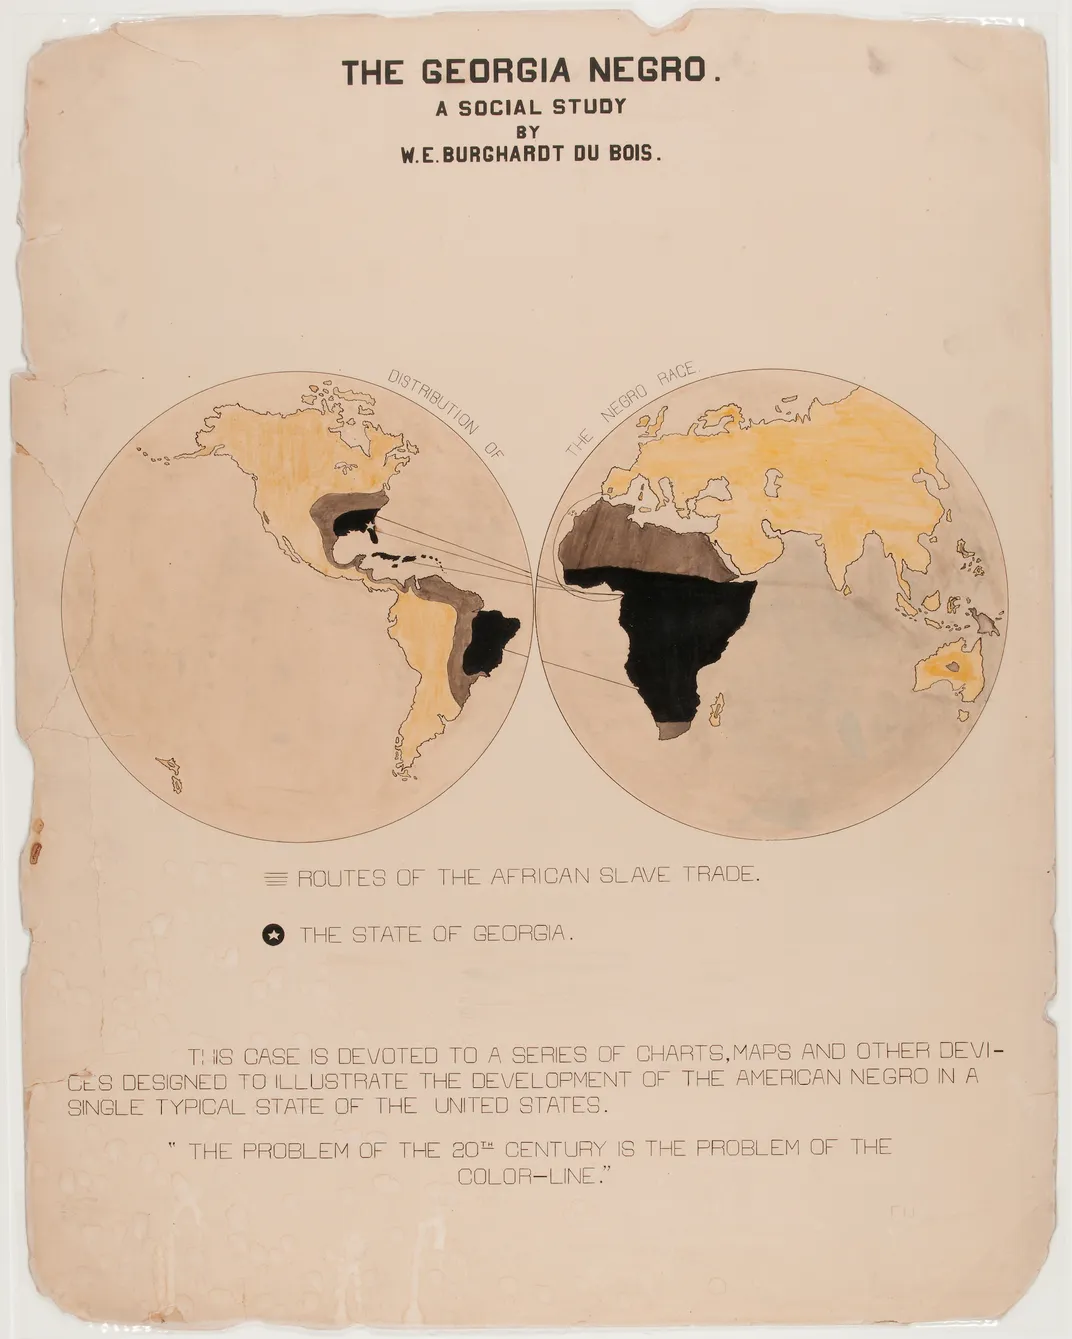 The Georgia Negro. A Social Study designed by W.E.B. Du Bois and students of Atlanta University, 1900